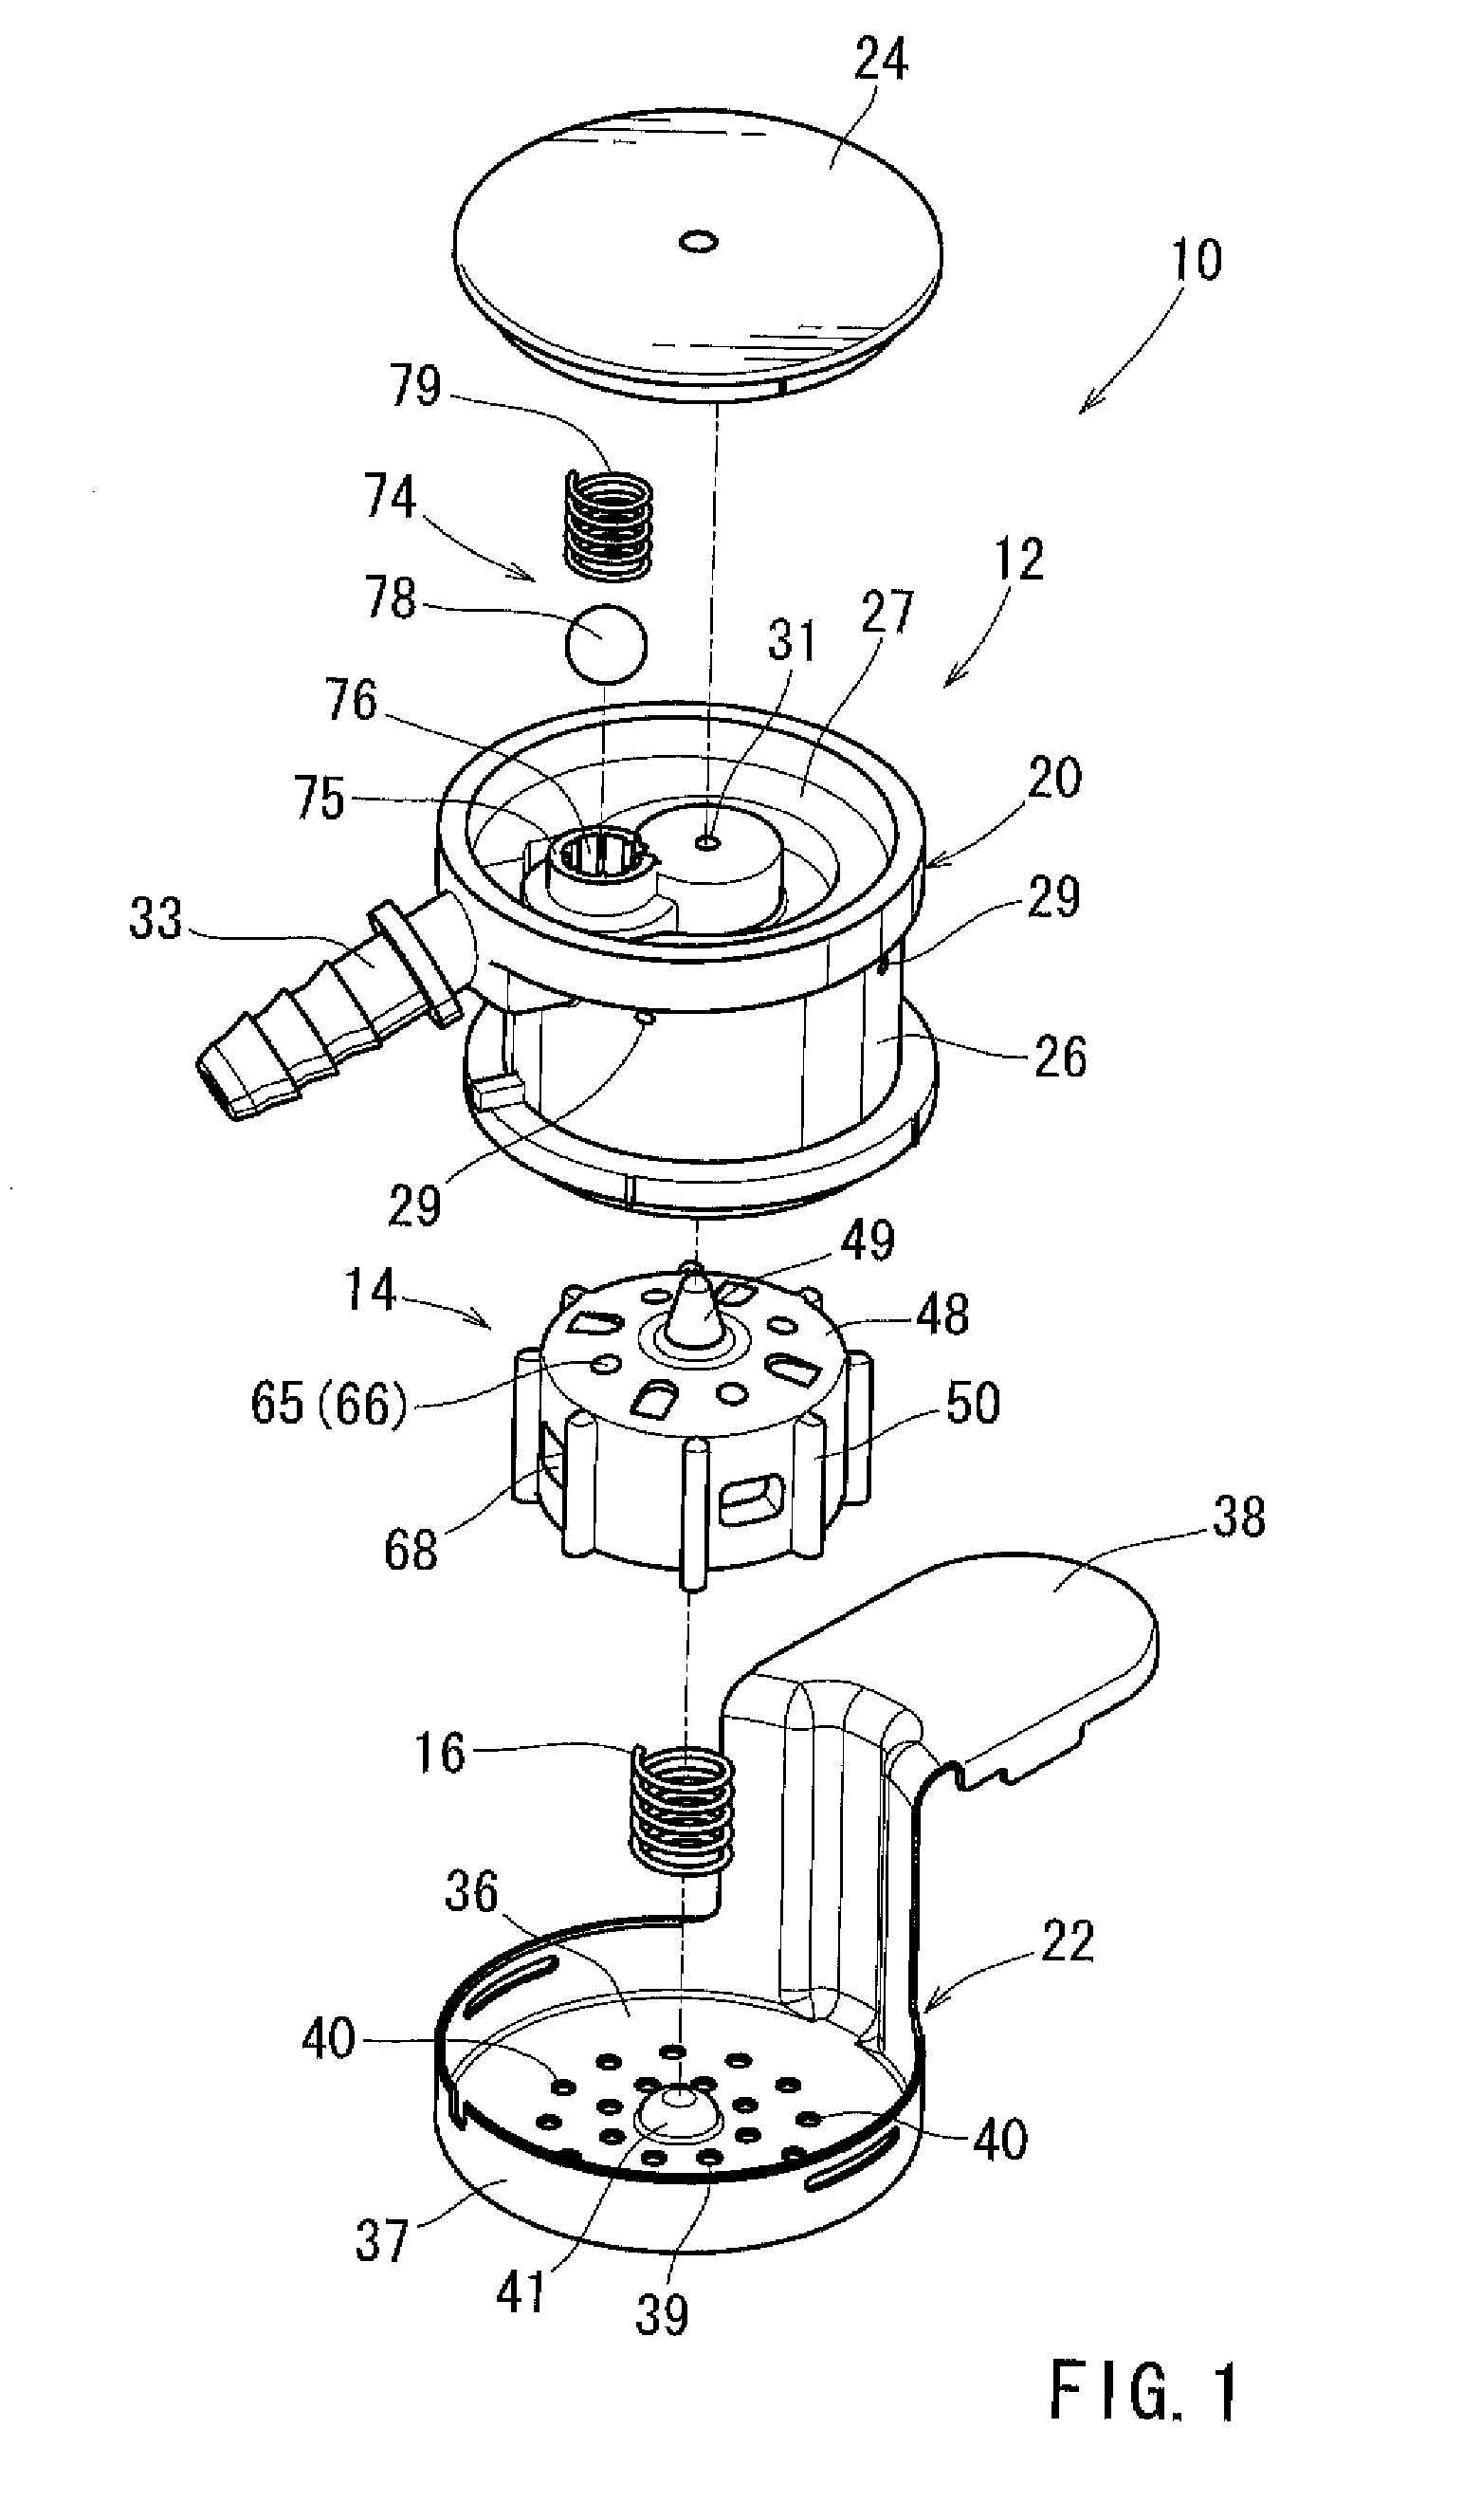 Fuel cutoff valves